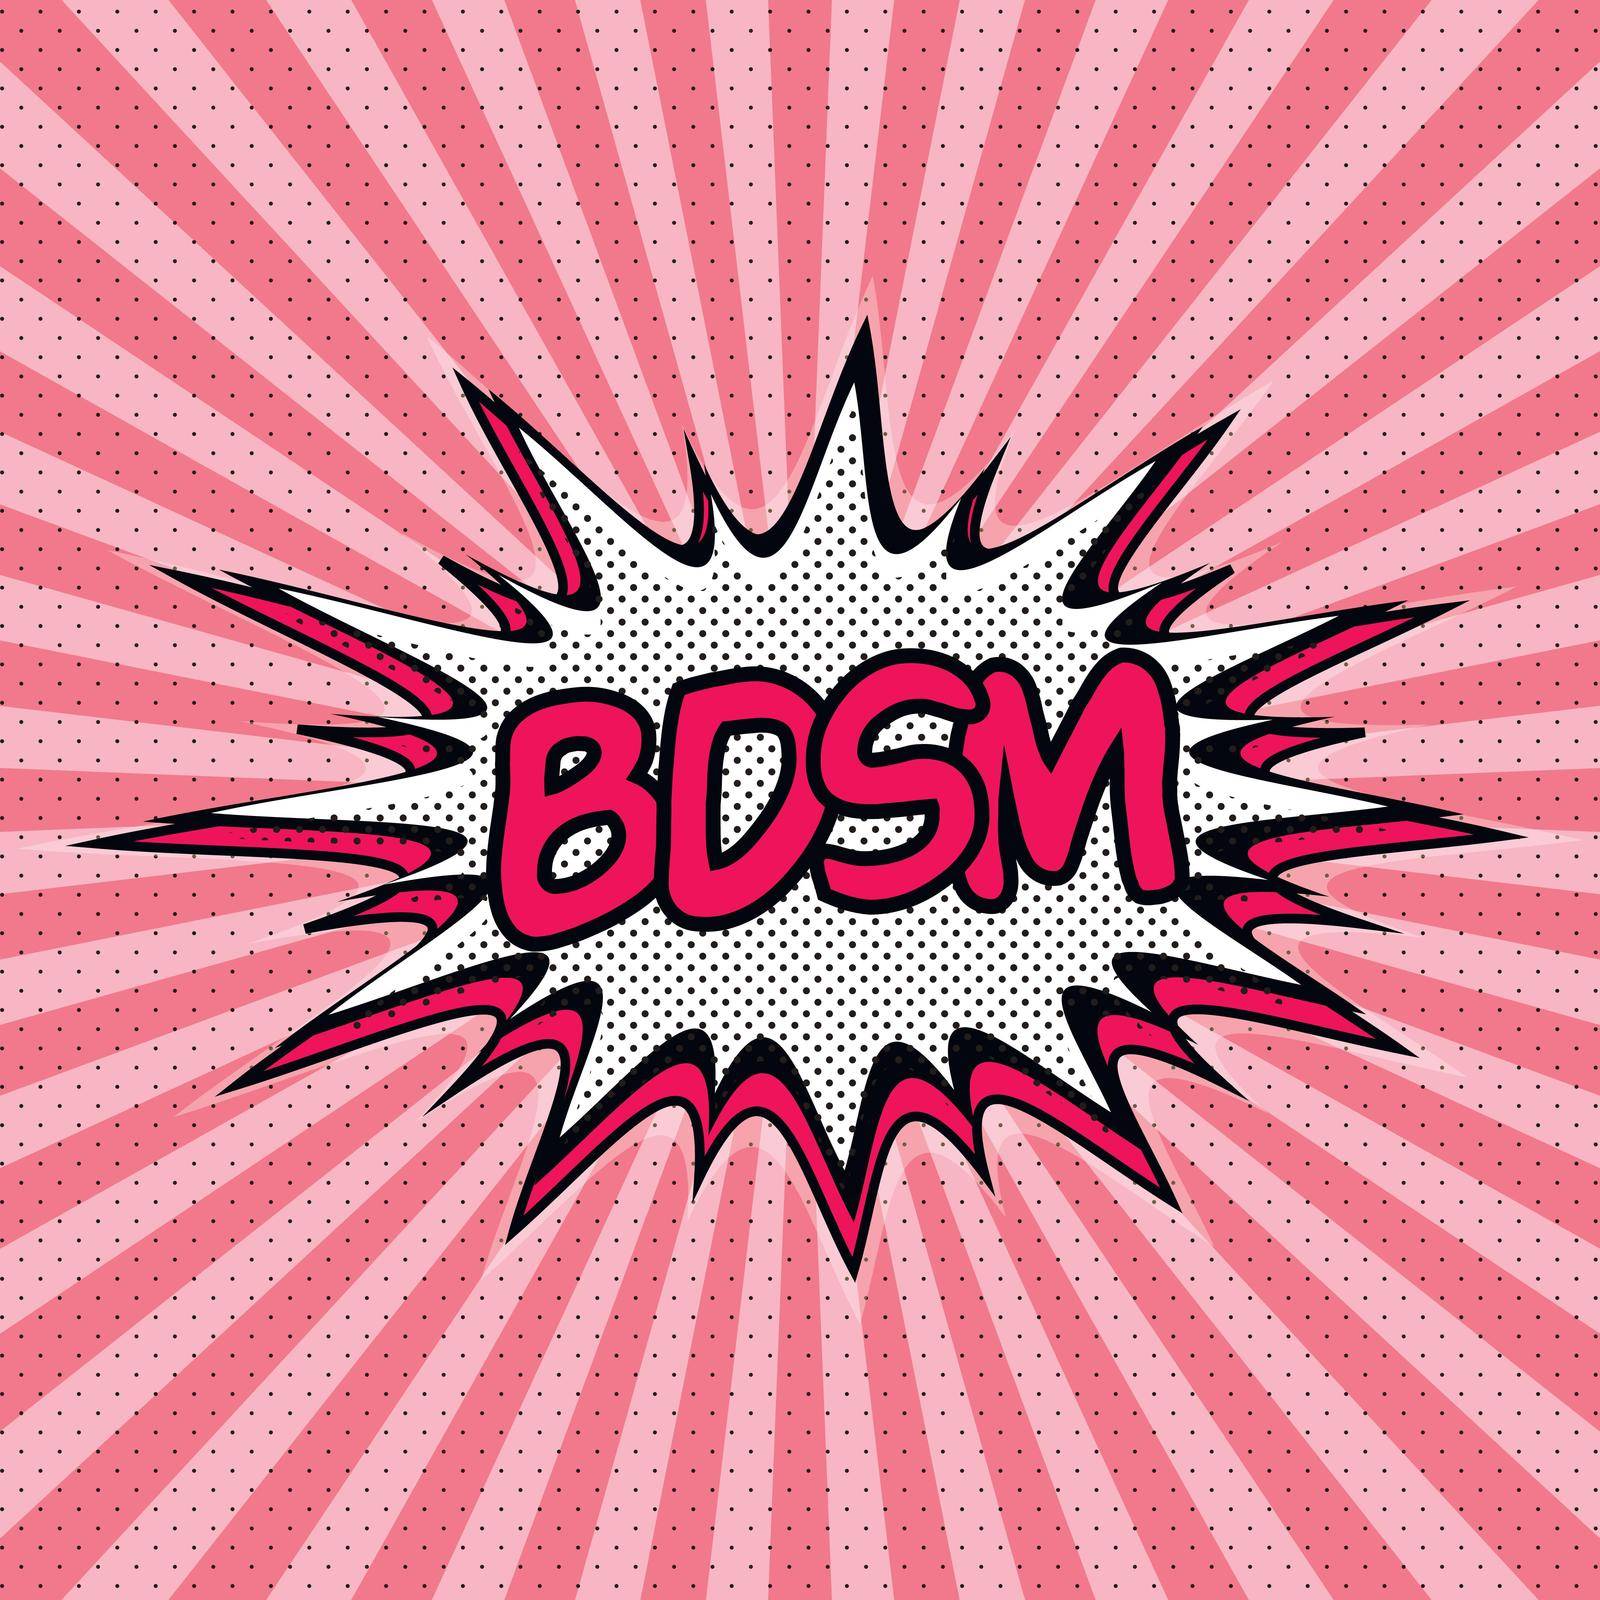 Declaration of BDSM pop art by koksikoks